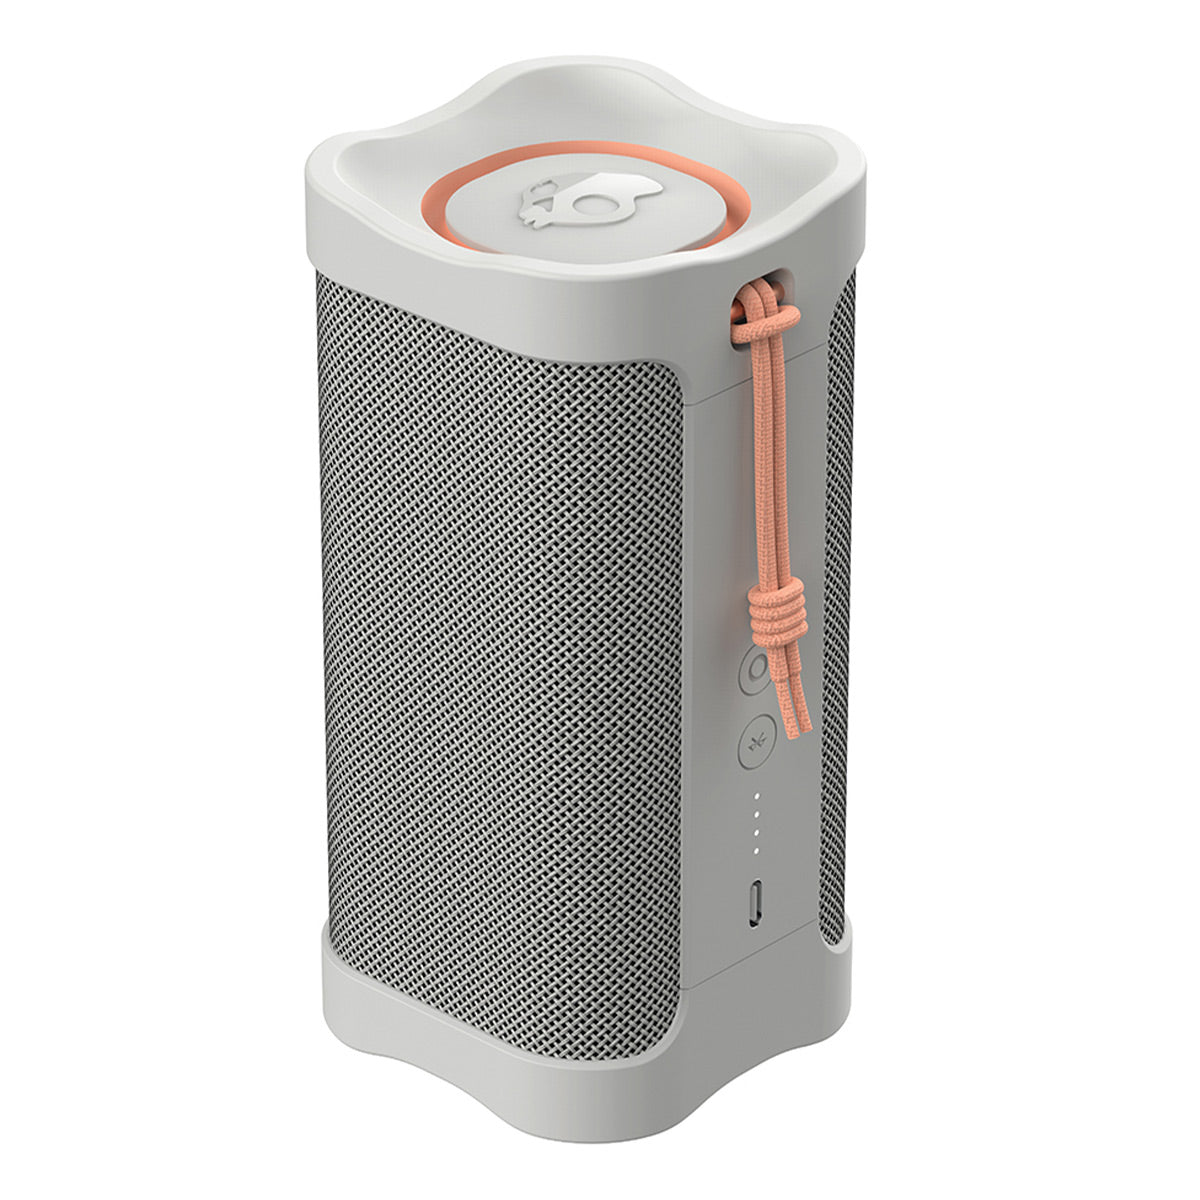 Skullcandy Terrain Wireless Bluetooth Speaker with IPX7 Waterproof Rating (Beige)